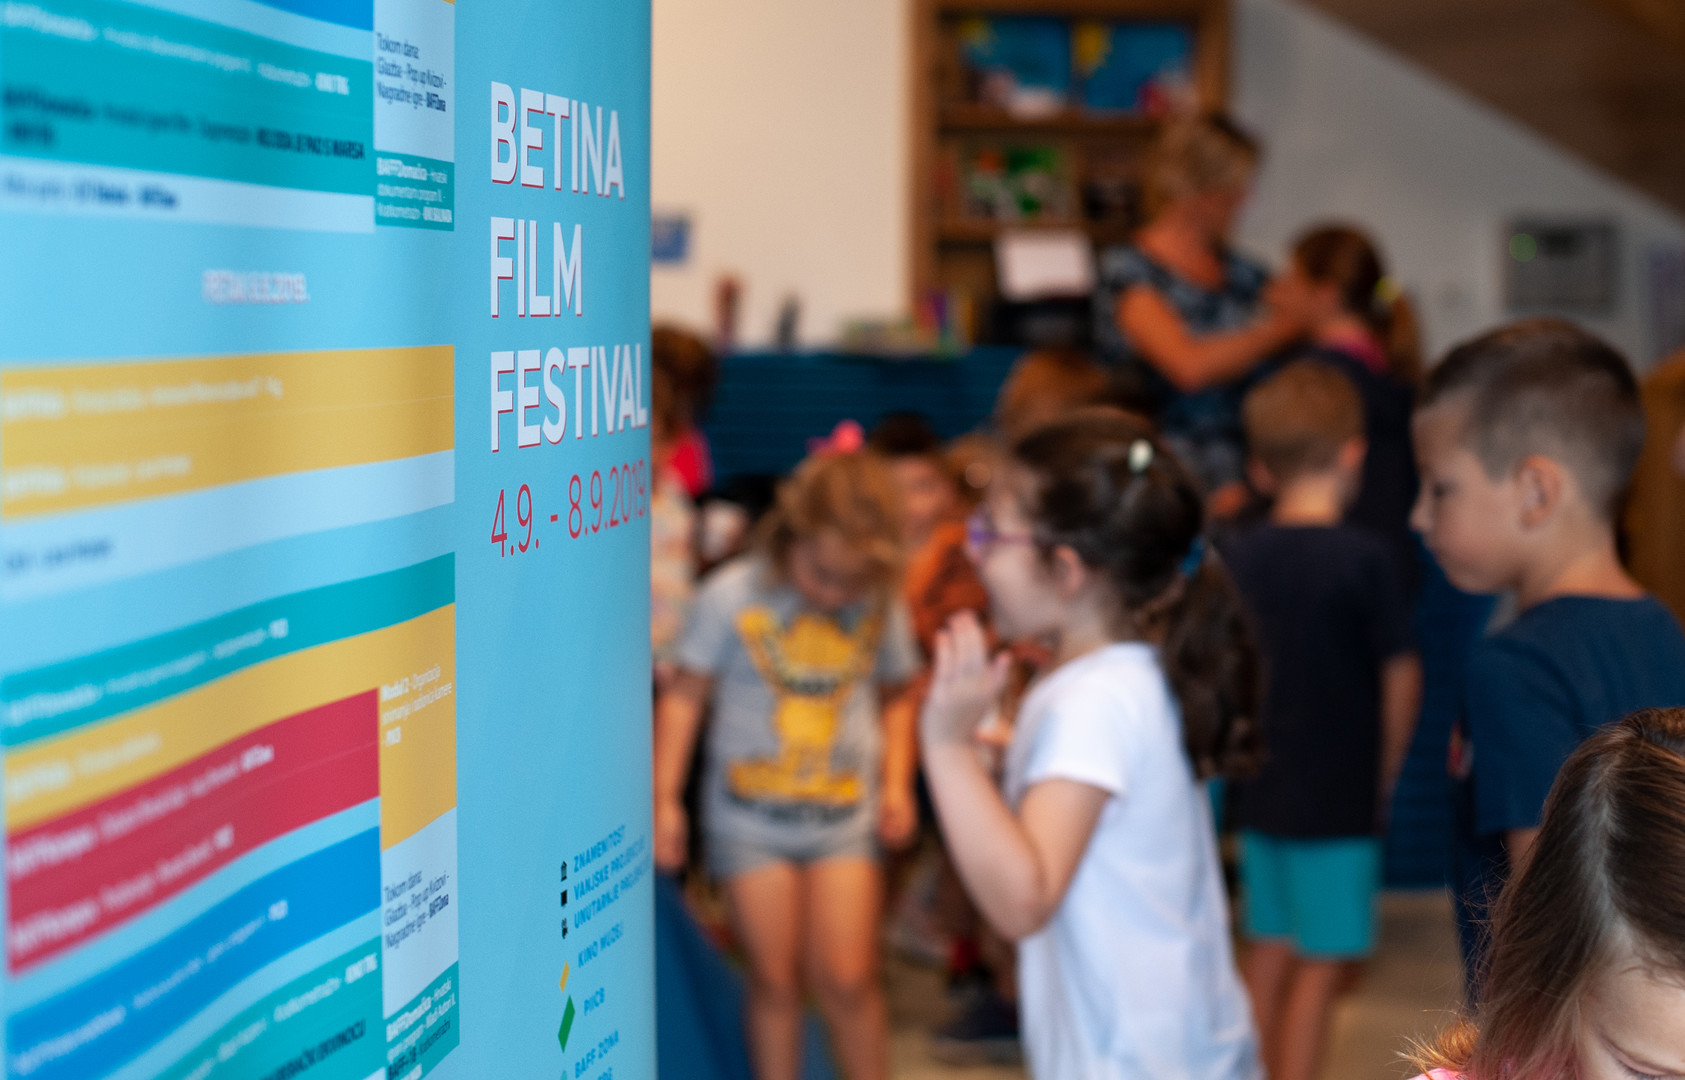 Betina film festival - BAFF 04 - Kornatica